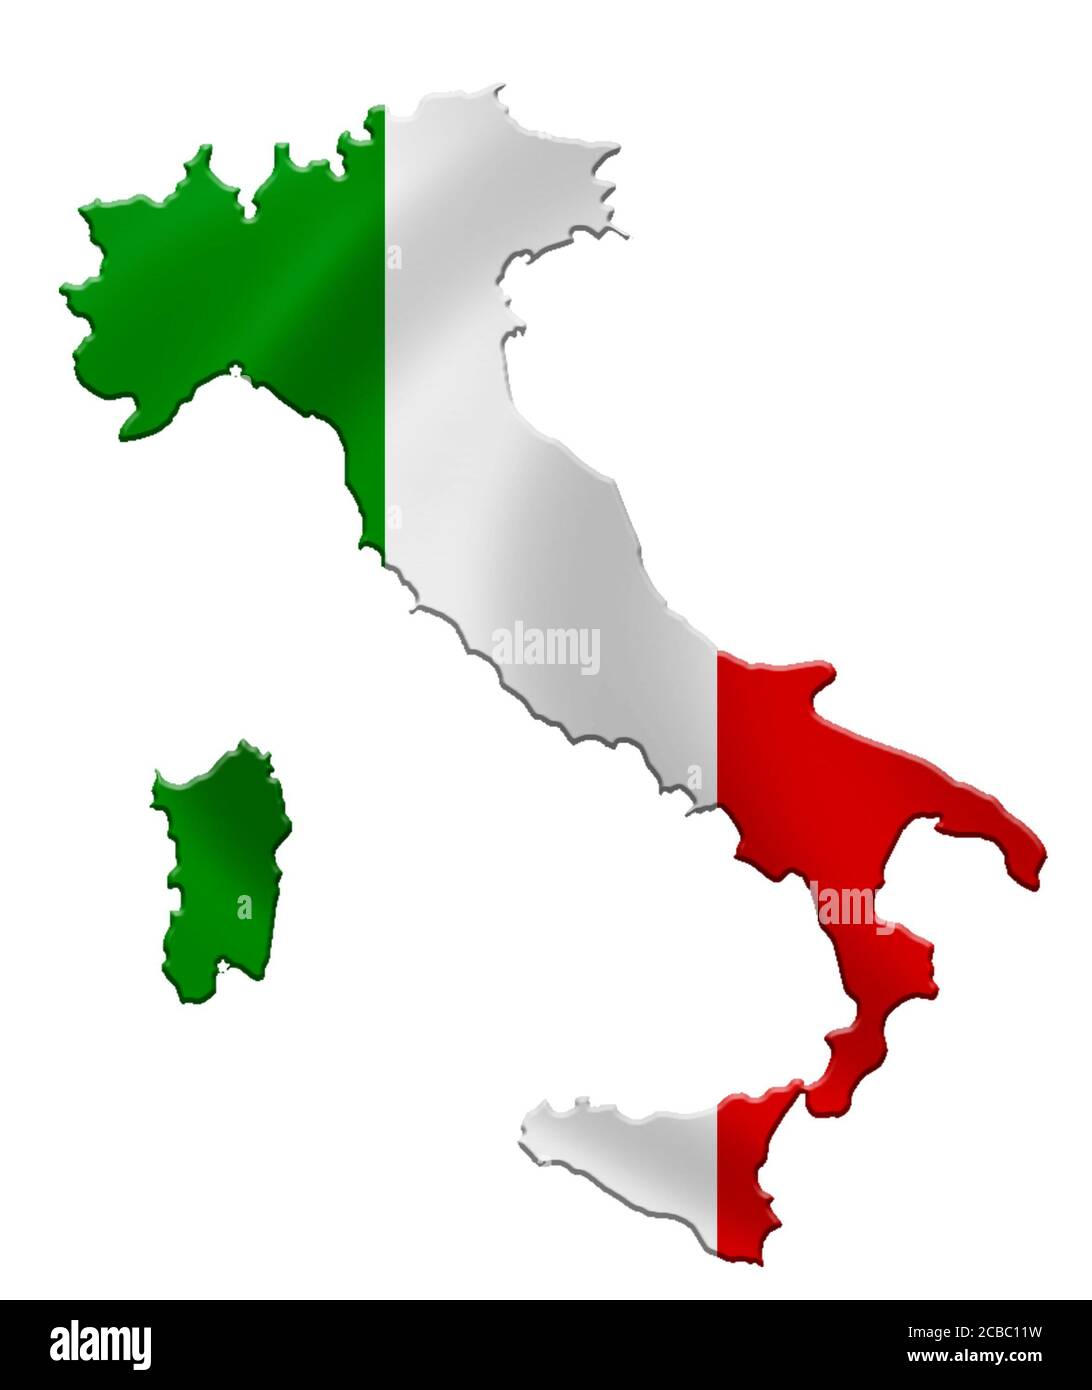 Italy - map icon Stock Photo